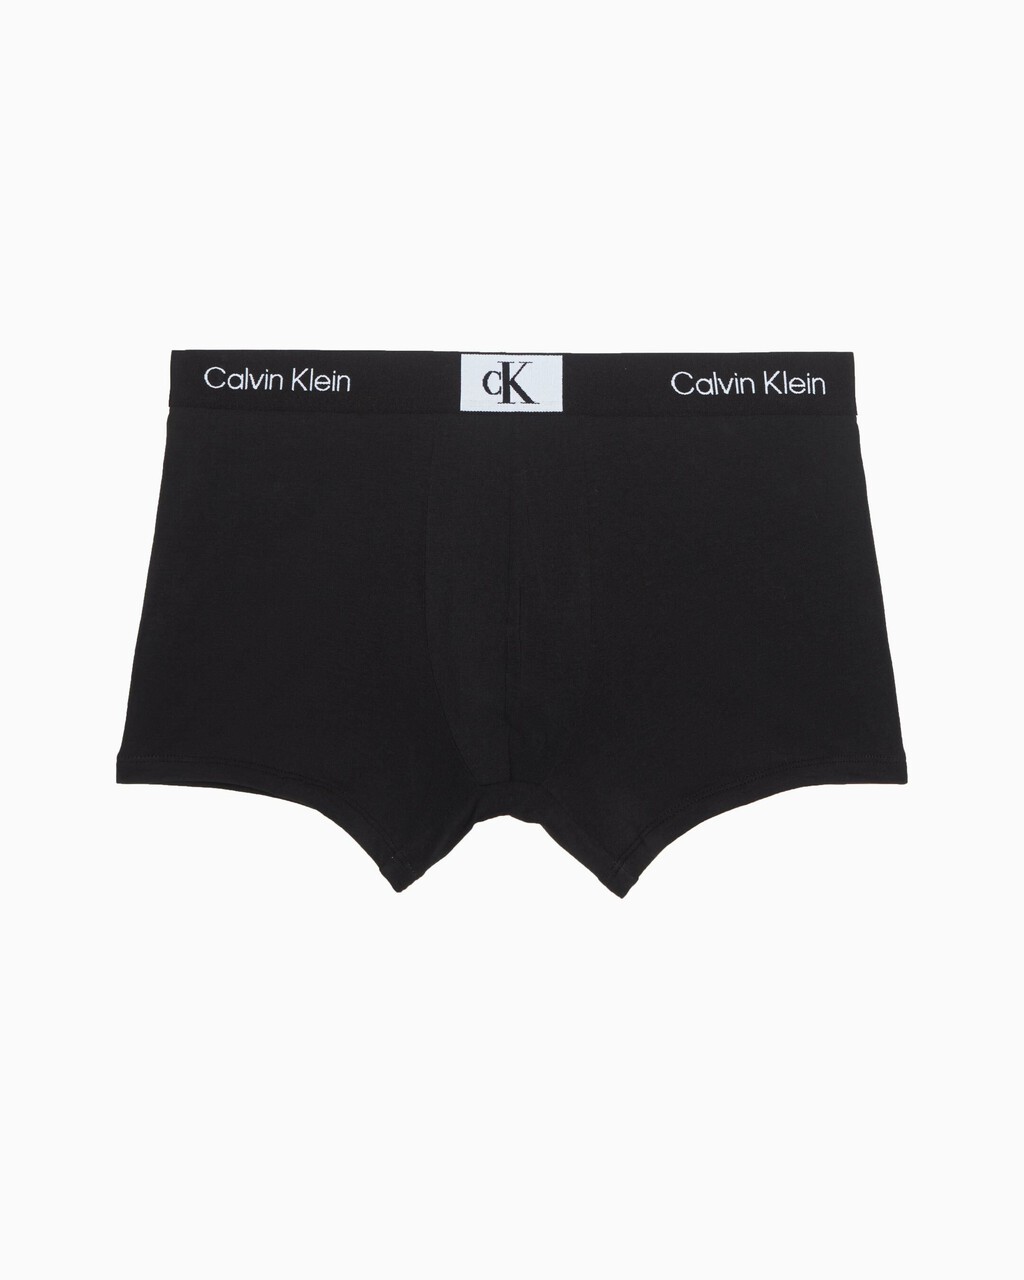 CALVIN KLEIN 1996 平角內褲, Black, hi-res